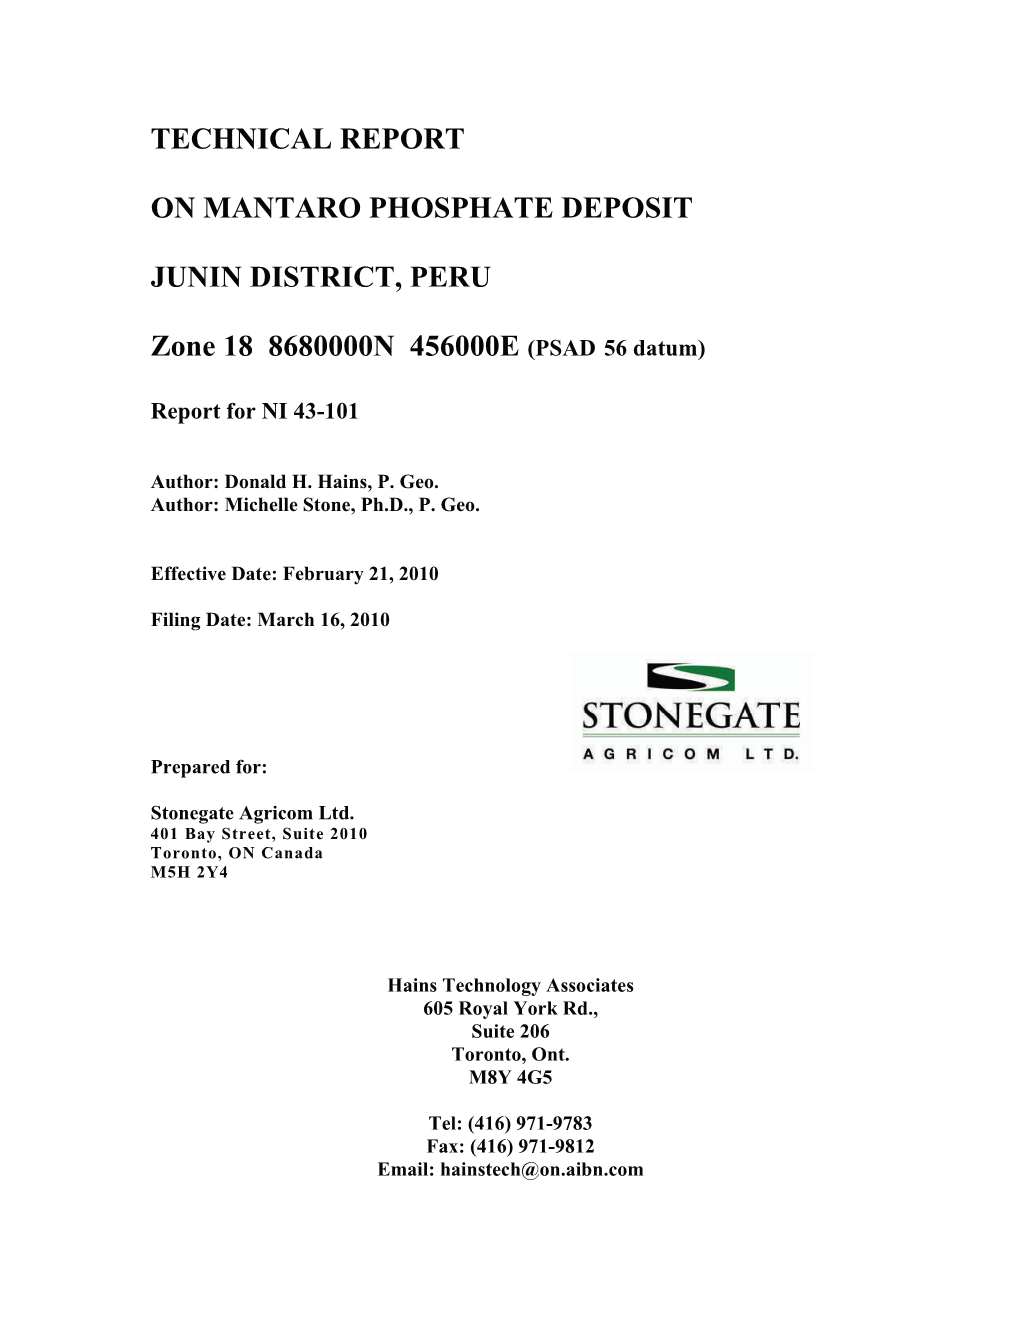 TECHNICAL REPORT on MANTARO PHOSPHATE DEPOSIT JUNIN DISTRICT, PERU Zone 18 8680000N 456000E (PSAD'56 Datum)